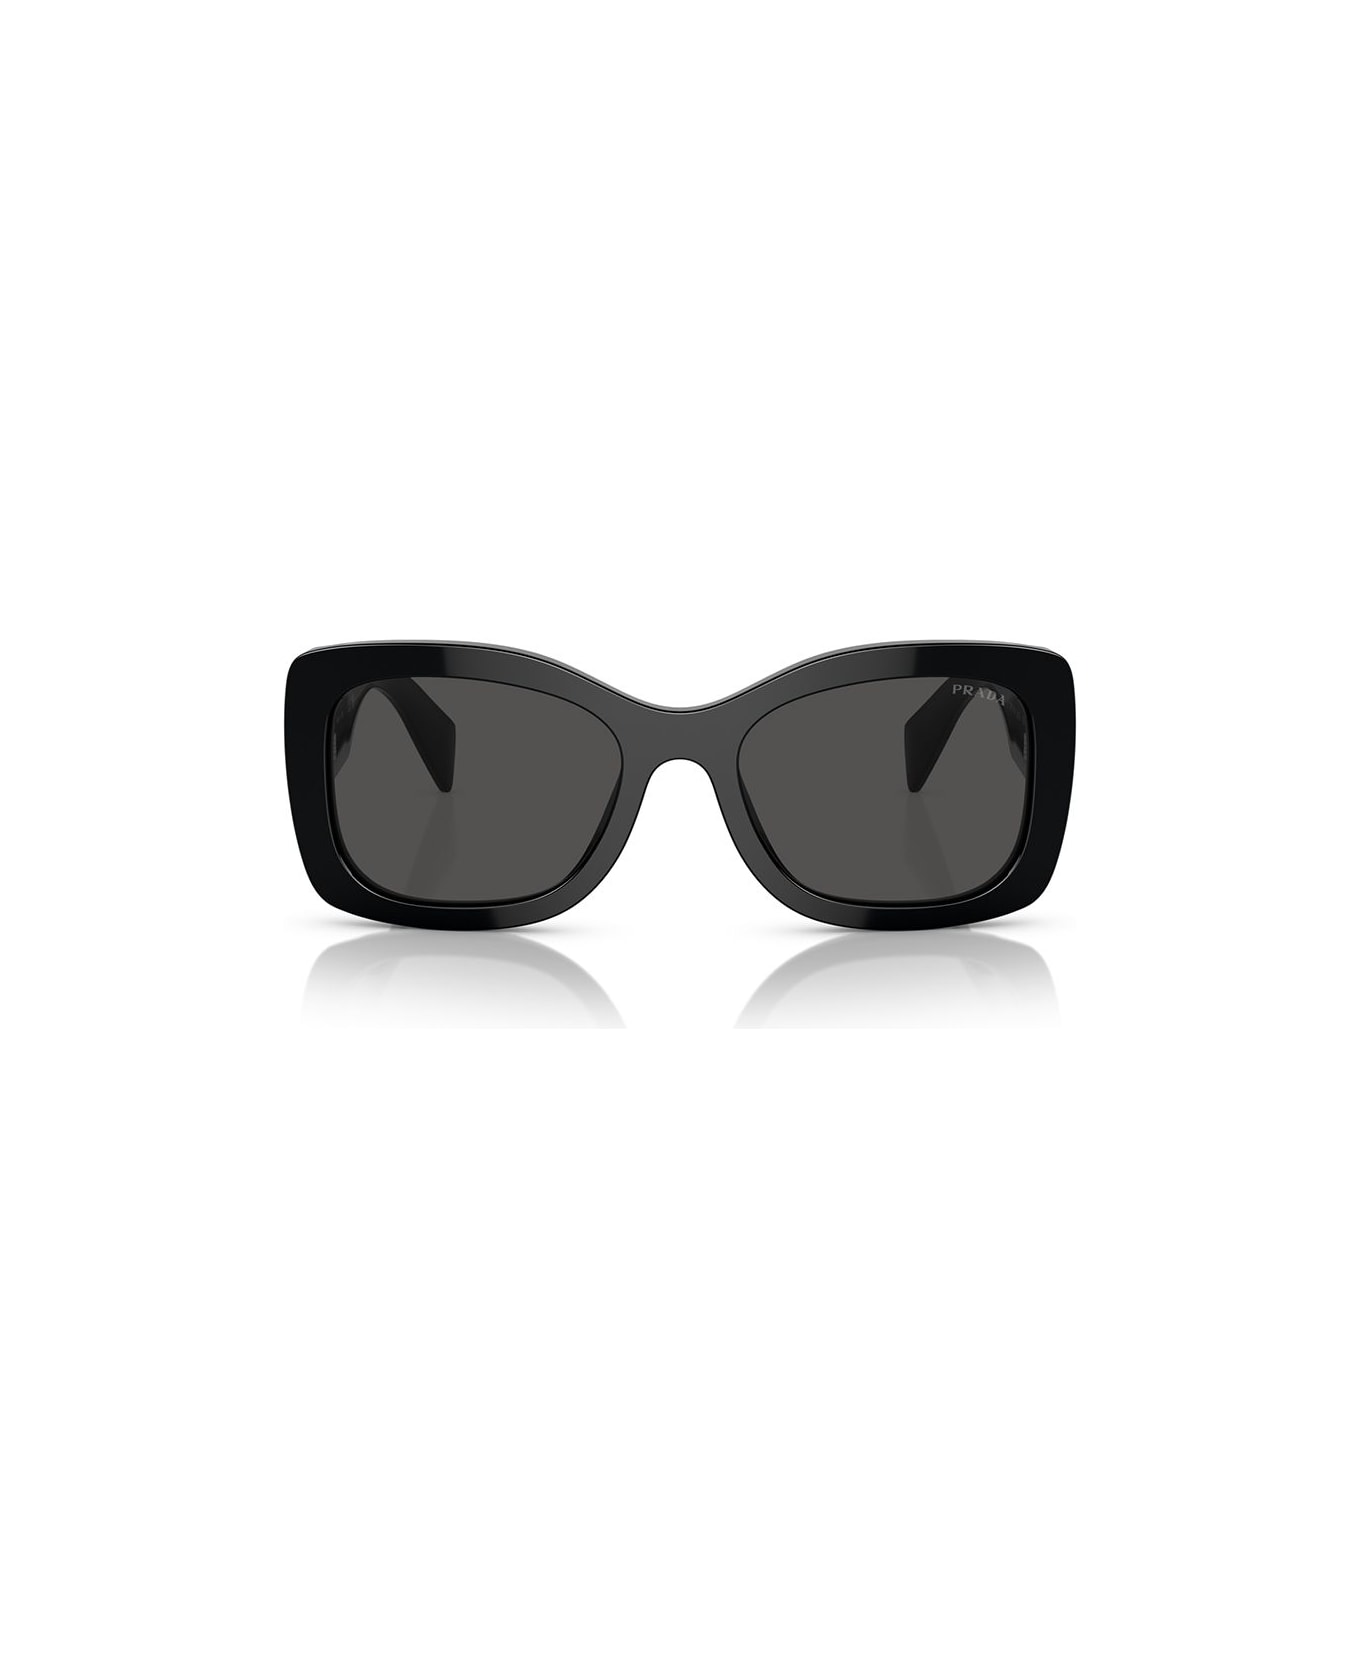 Prada Eyewear Sunglasses - 1AB5S0